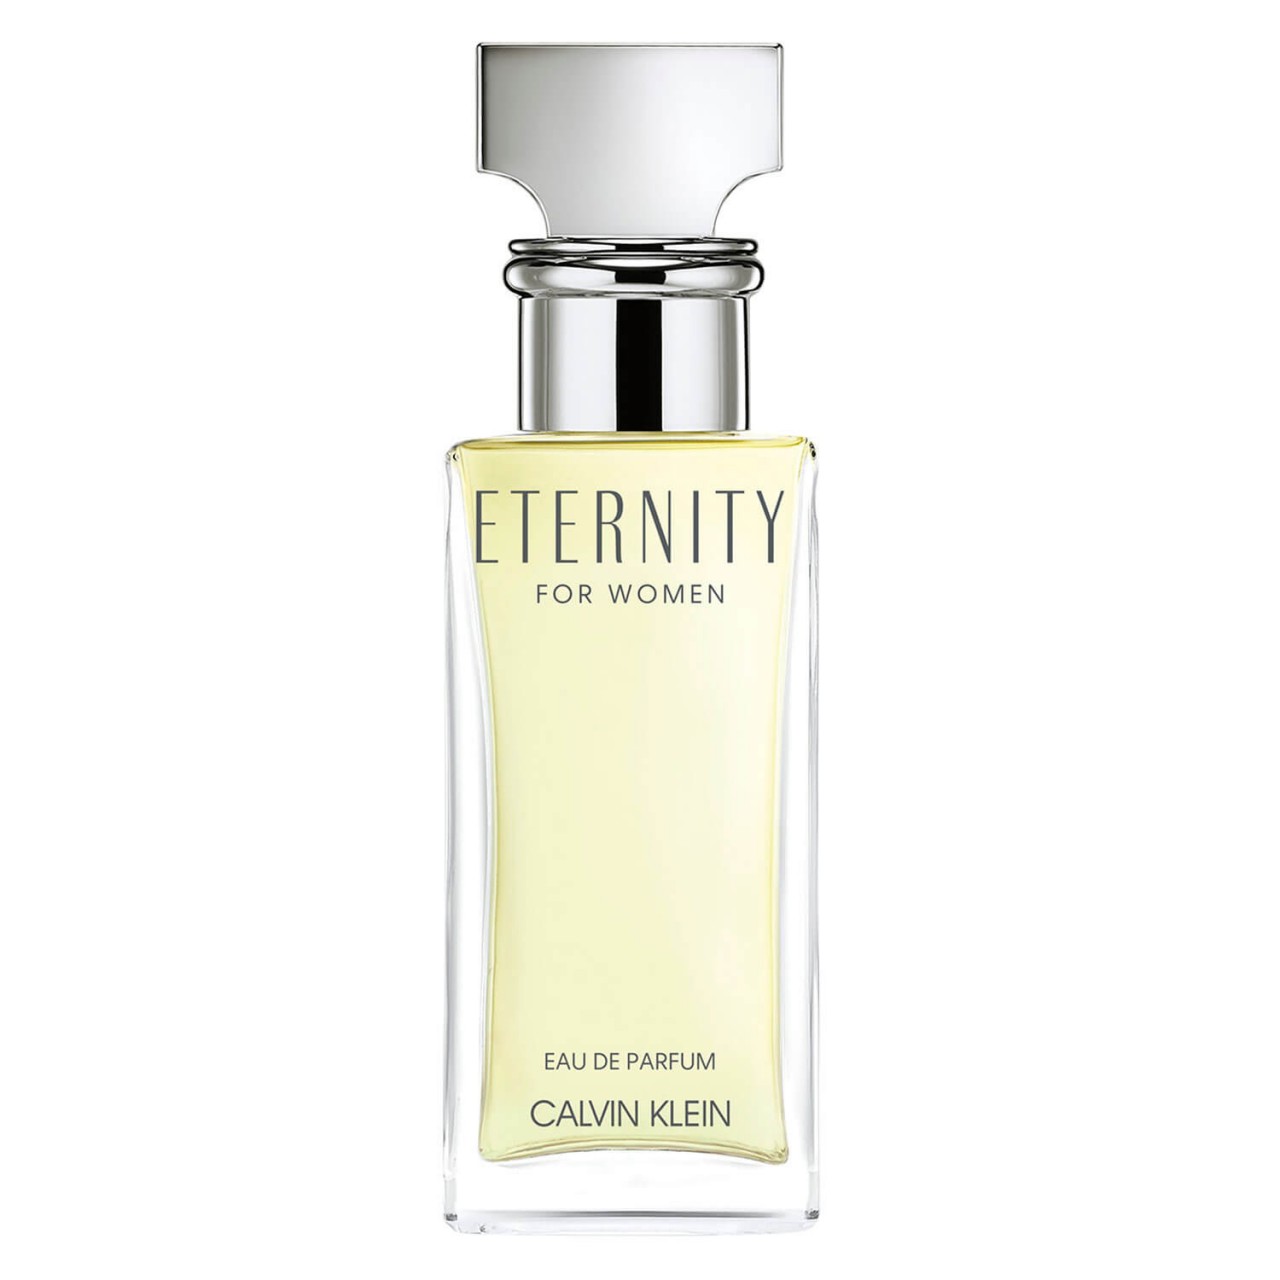 Eternity - Eau de Parfum von Calvin Klein